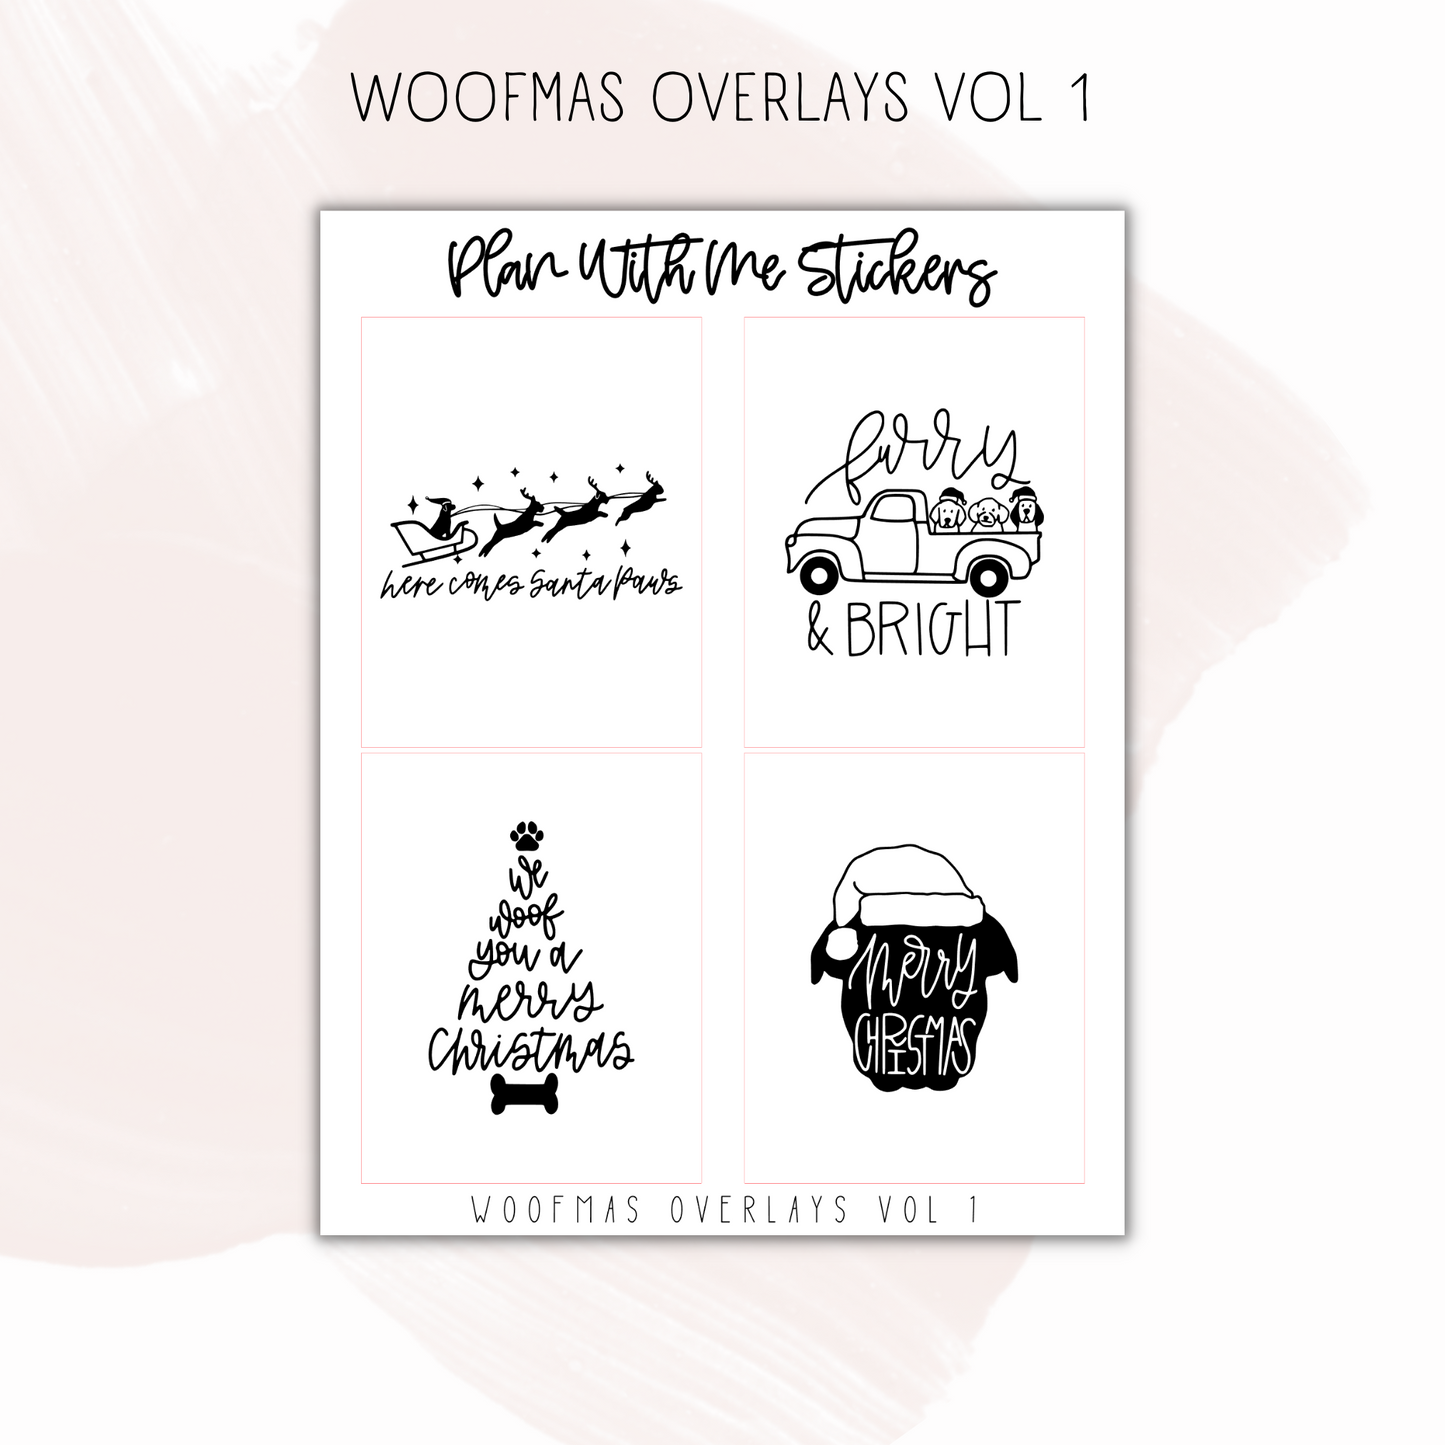 Woofmas Overlays Vol 1